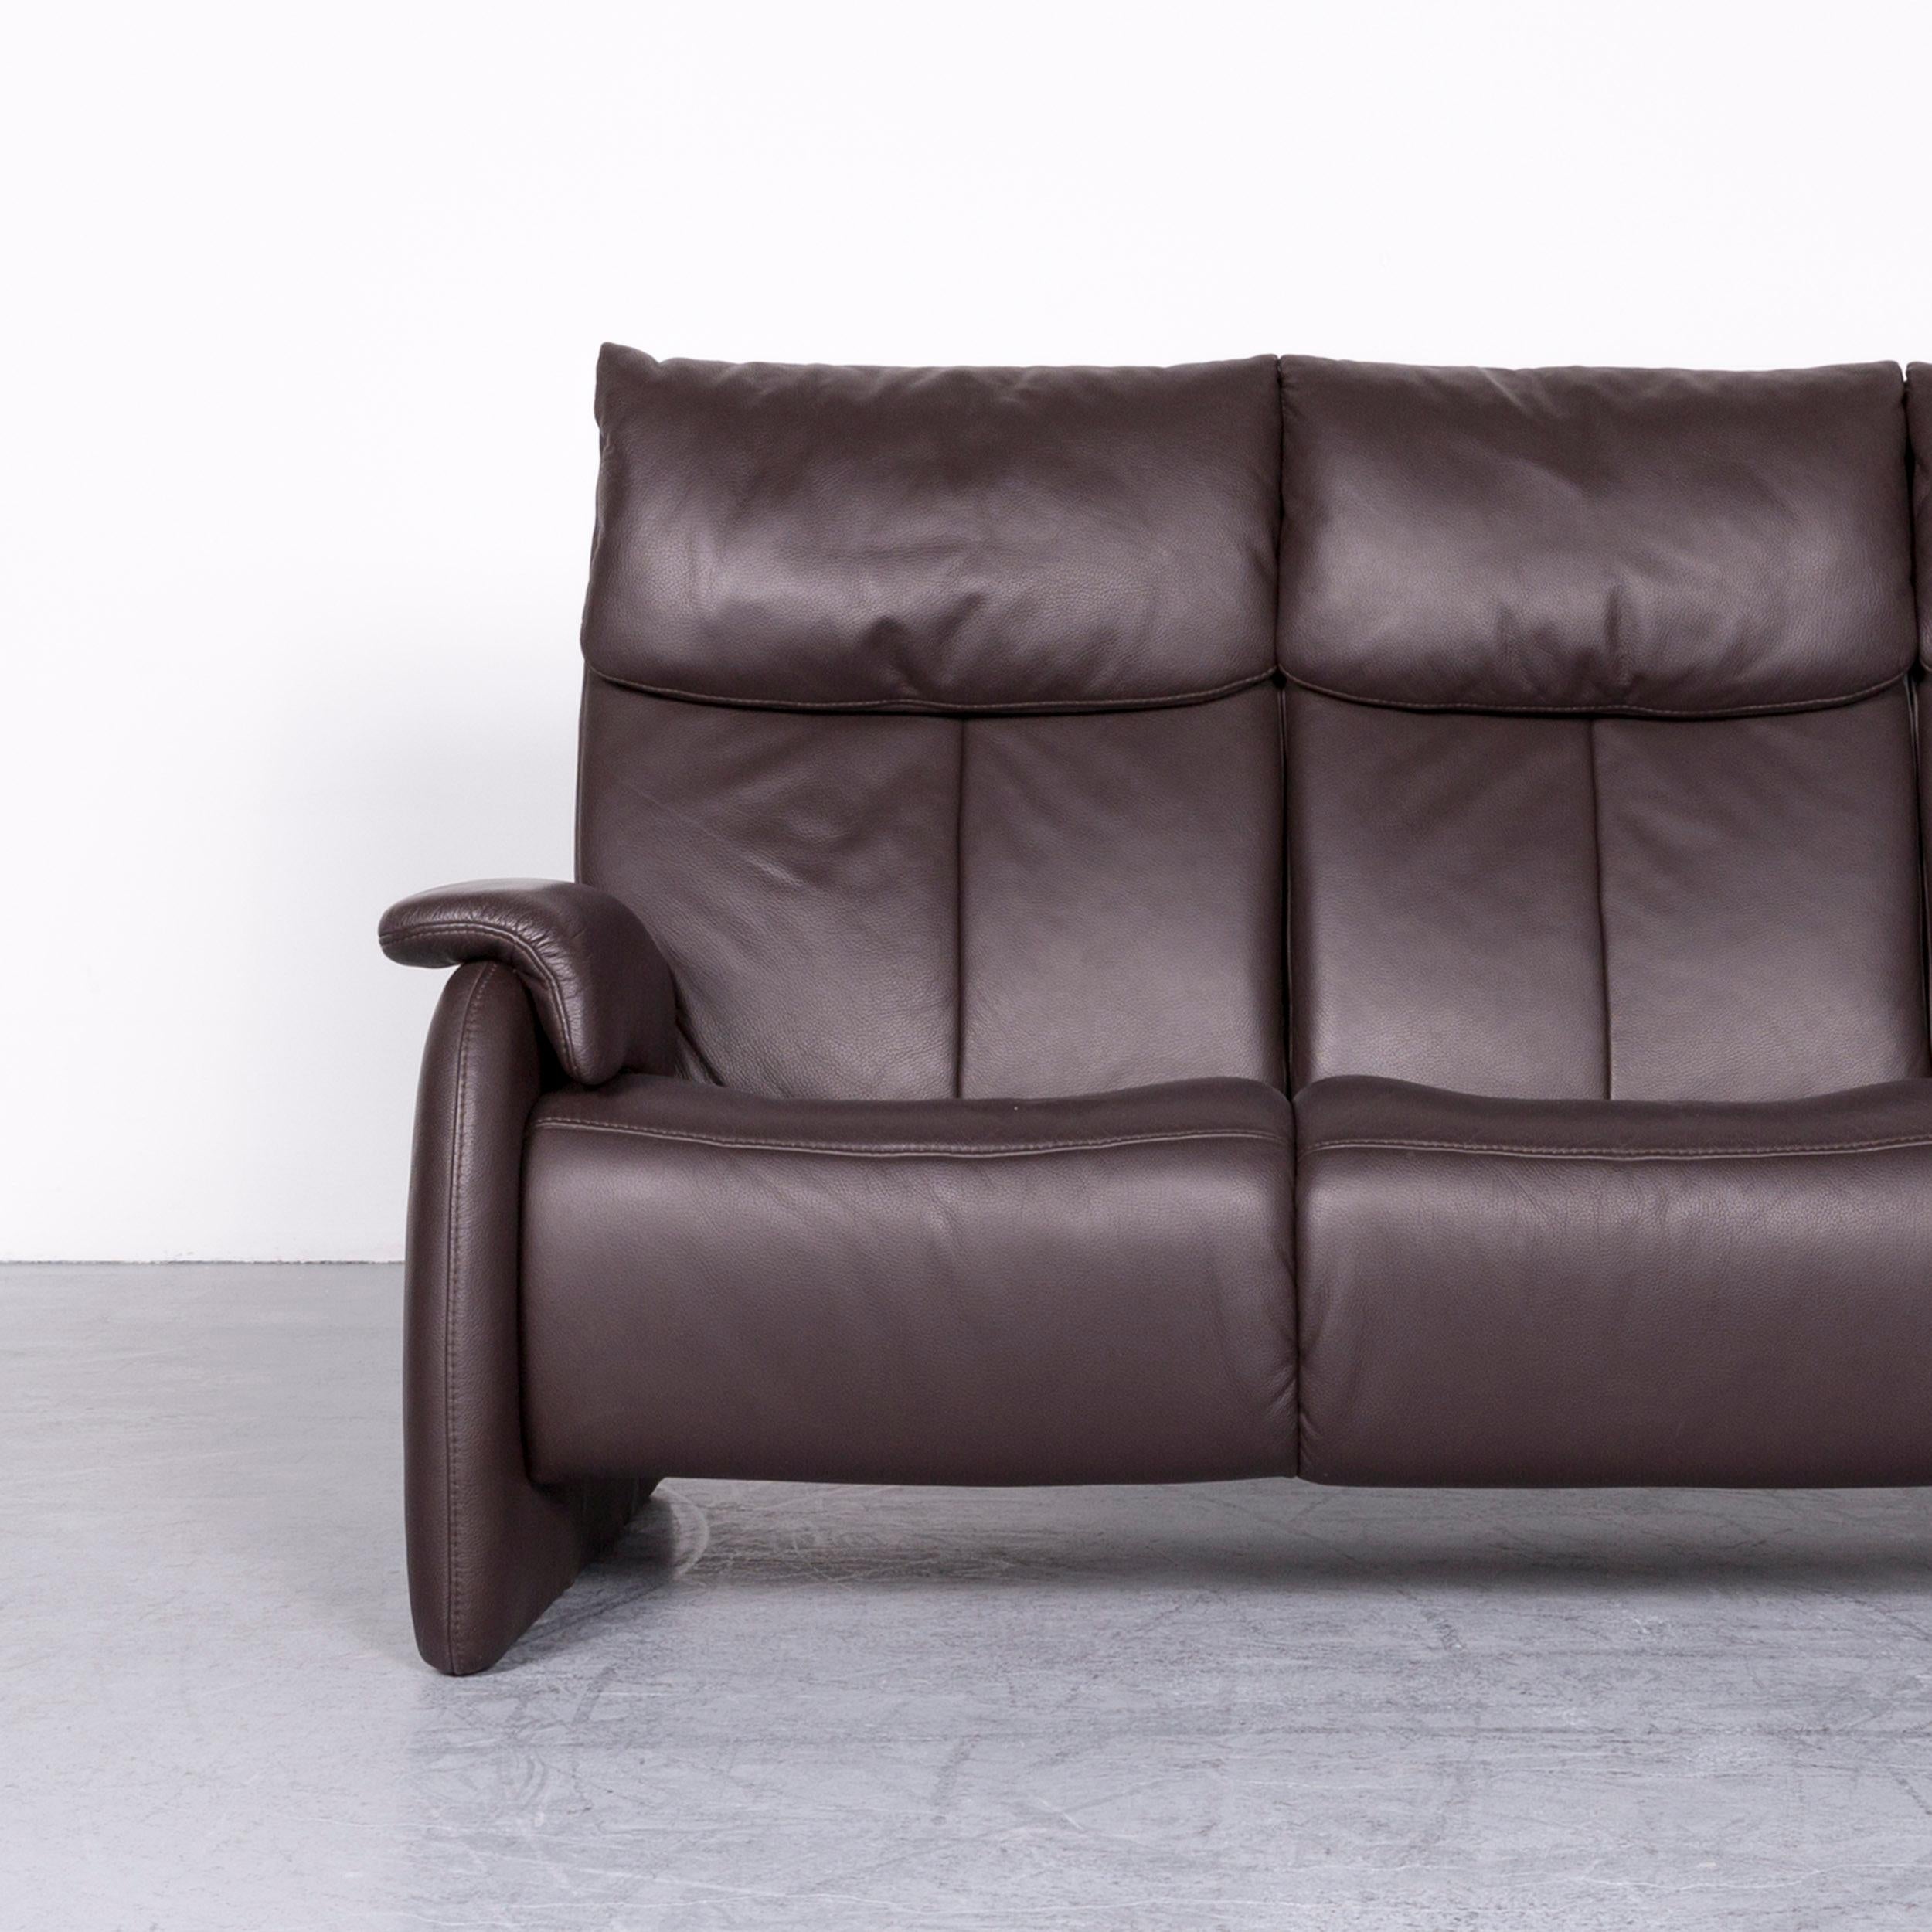 German Himolla Designer Sofa Brown Leather Three-Seat Couch